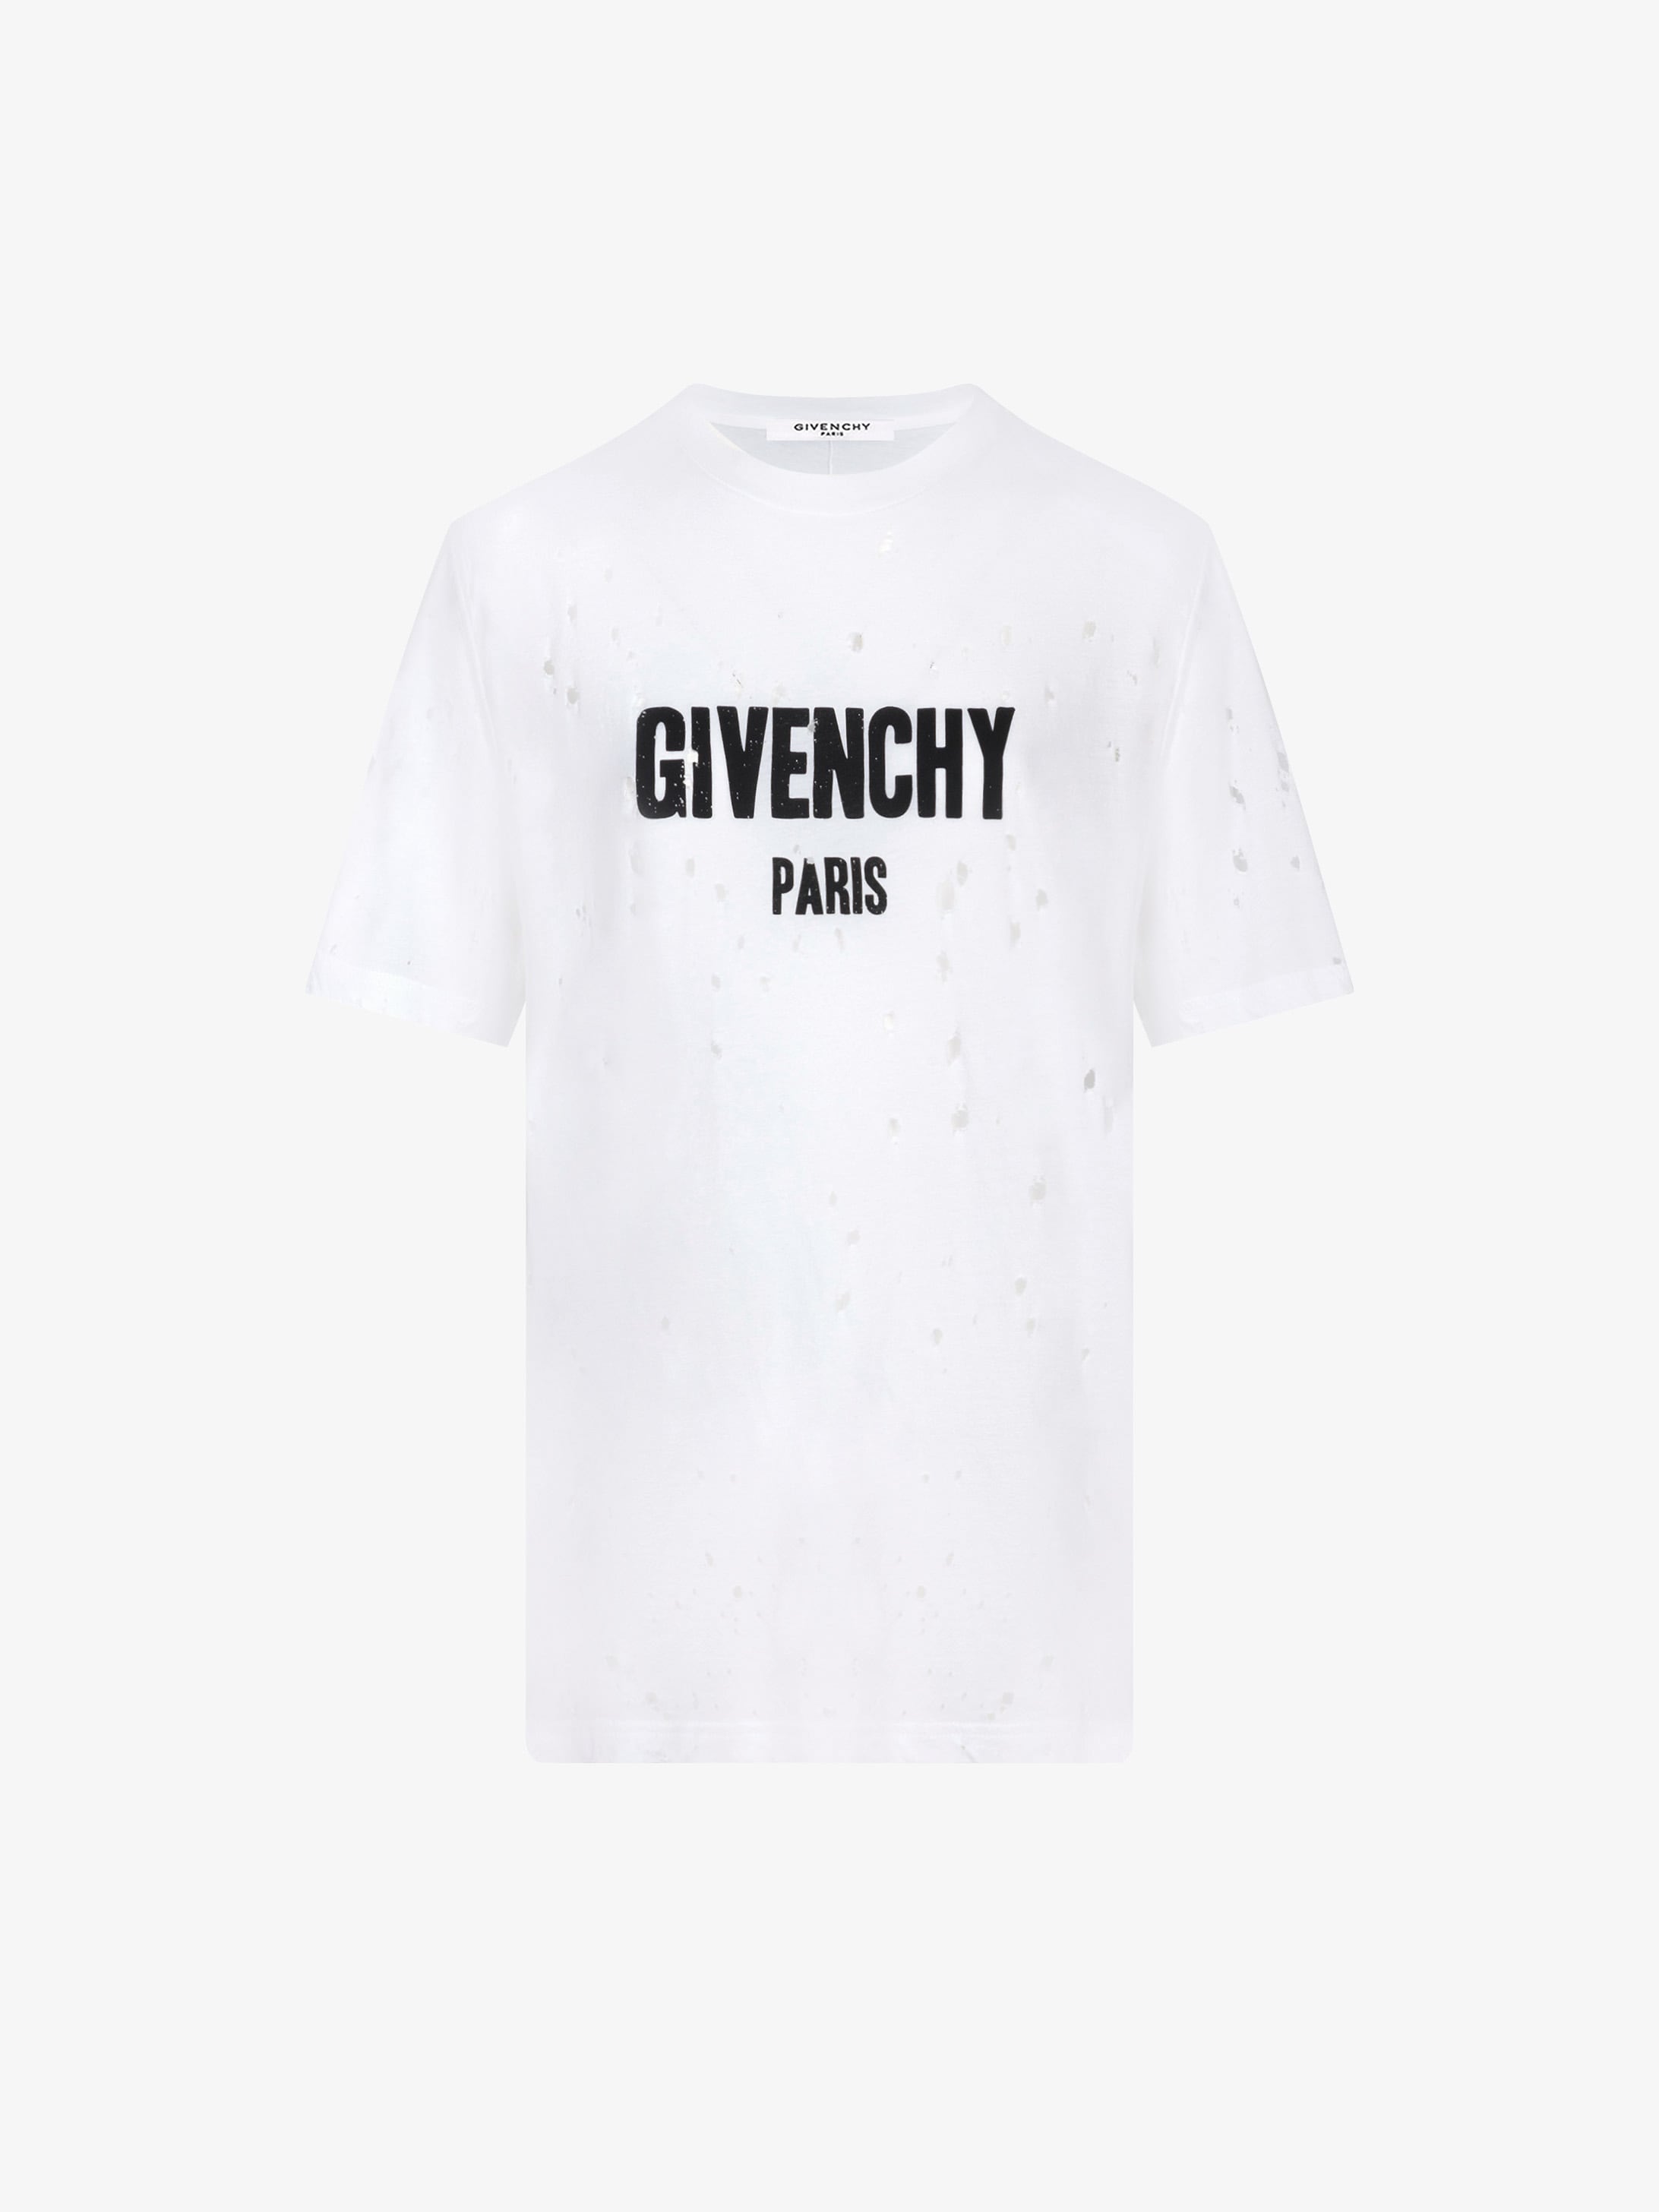 Givenchy PARIS destroyed T-shirt | GIVENCHY Paris